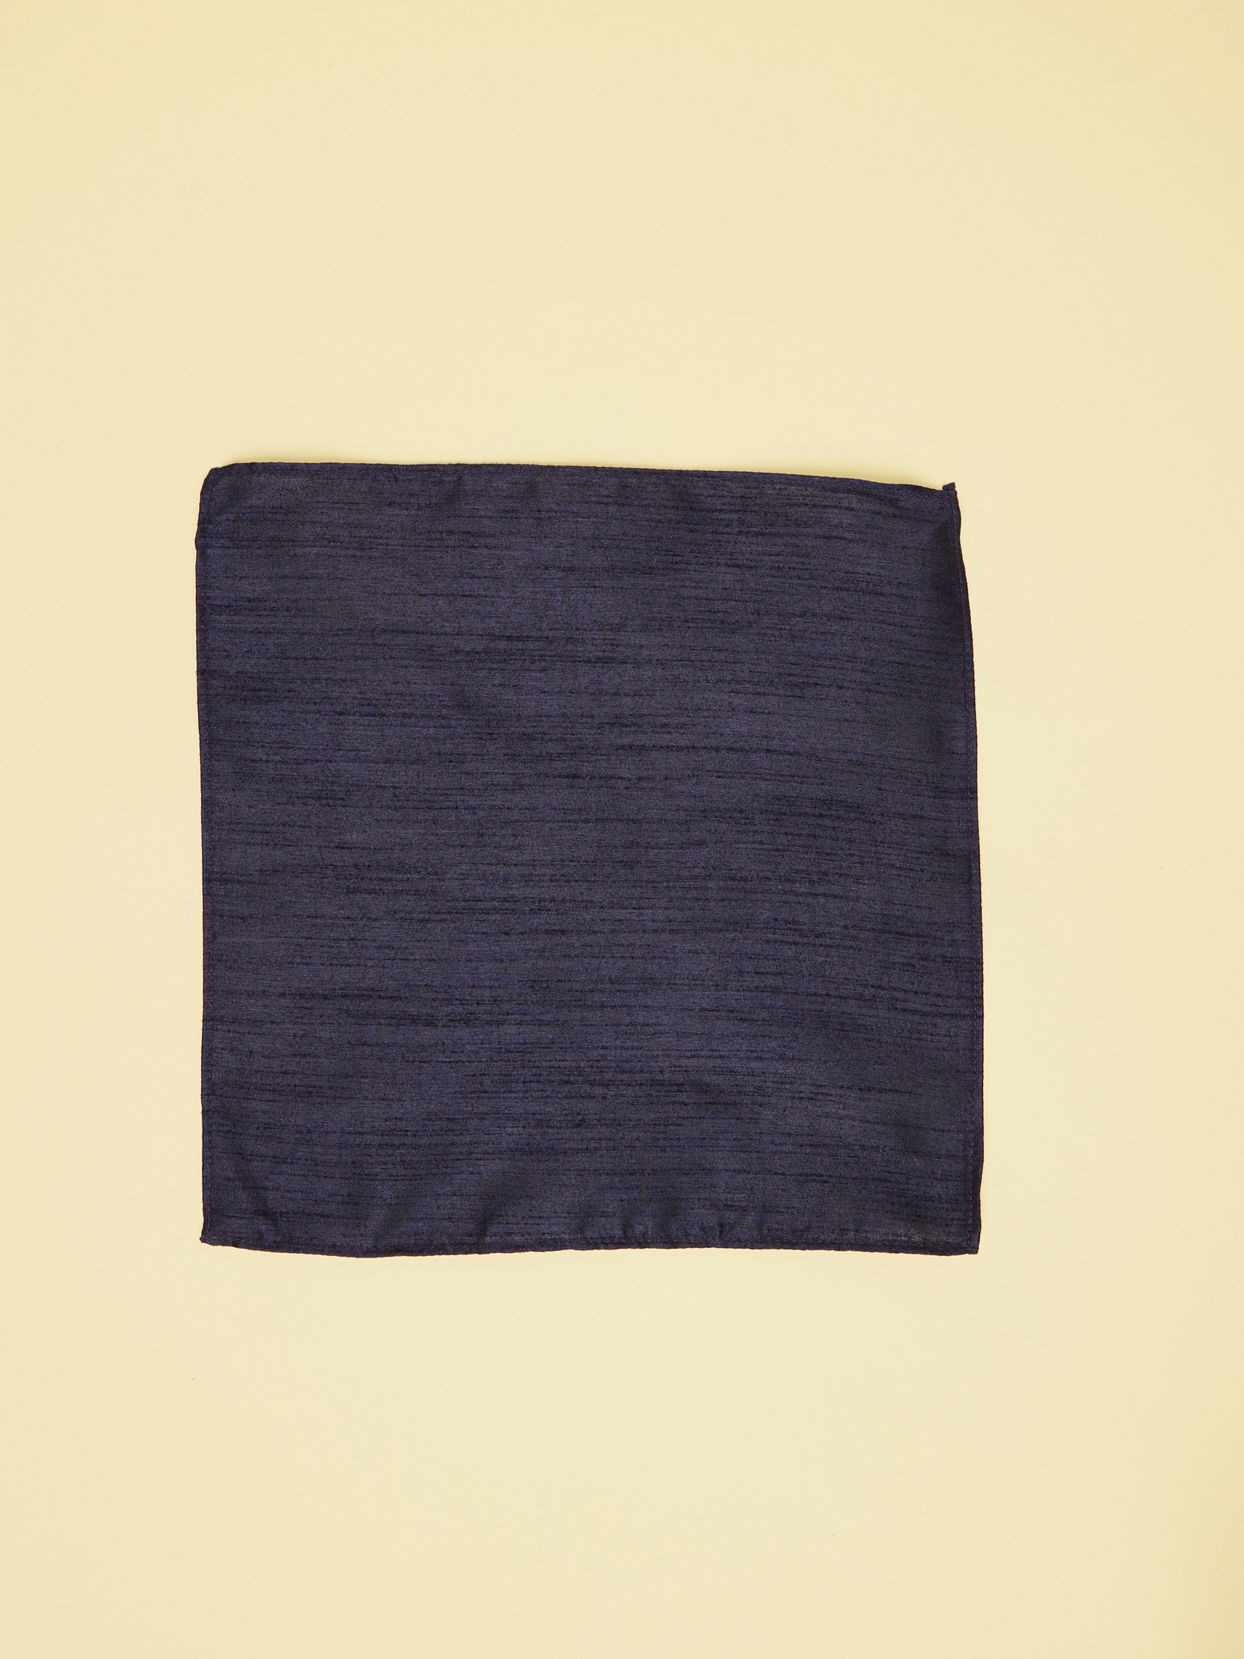 Midnight Blue Textured Pocket Square image number 1